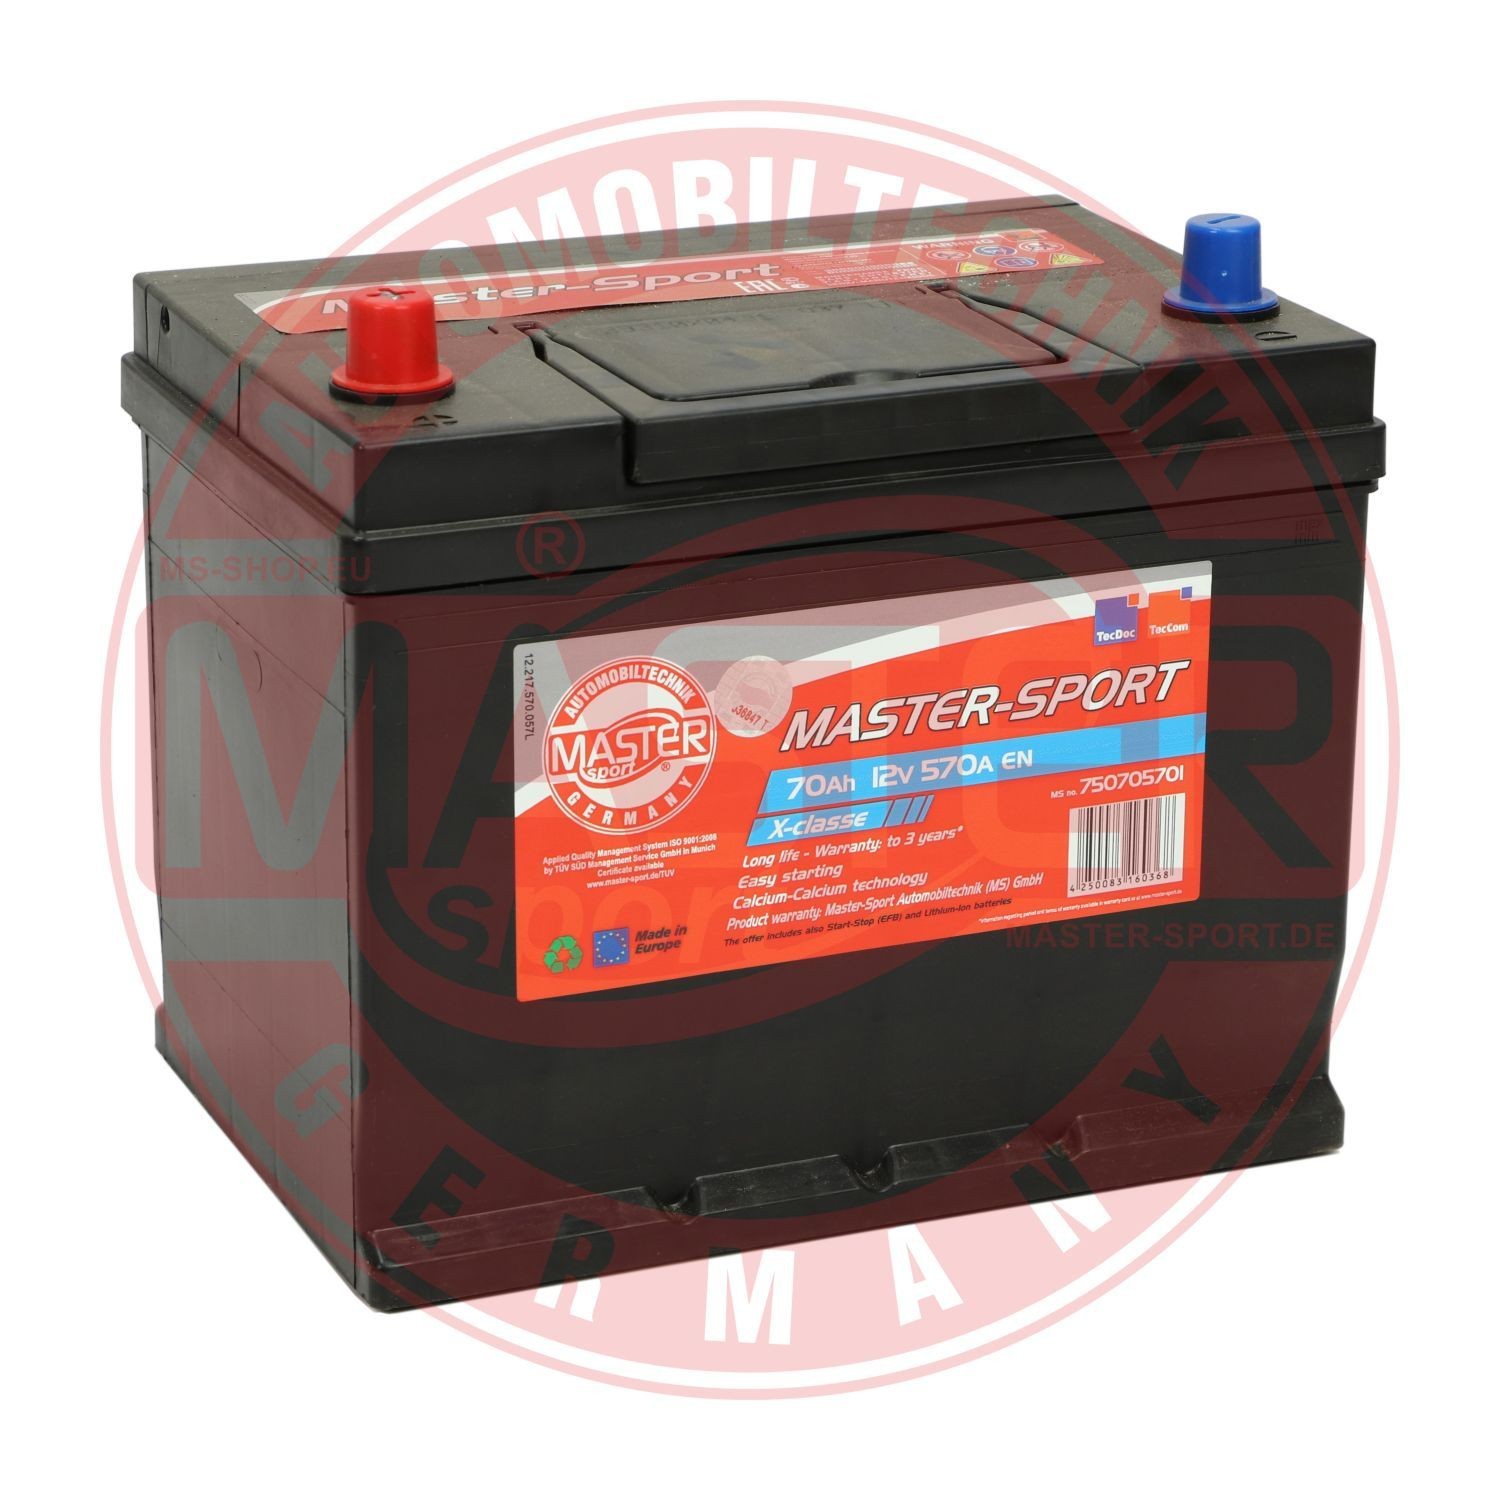 Original 750705701 MASTER-SPORT Start stop battery JEEP